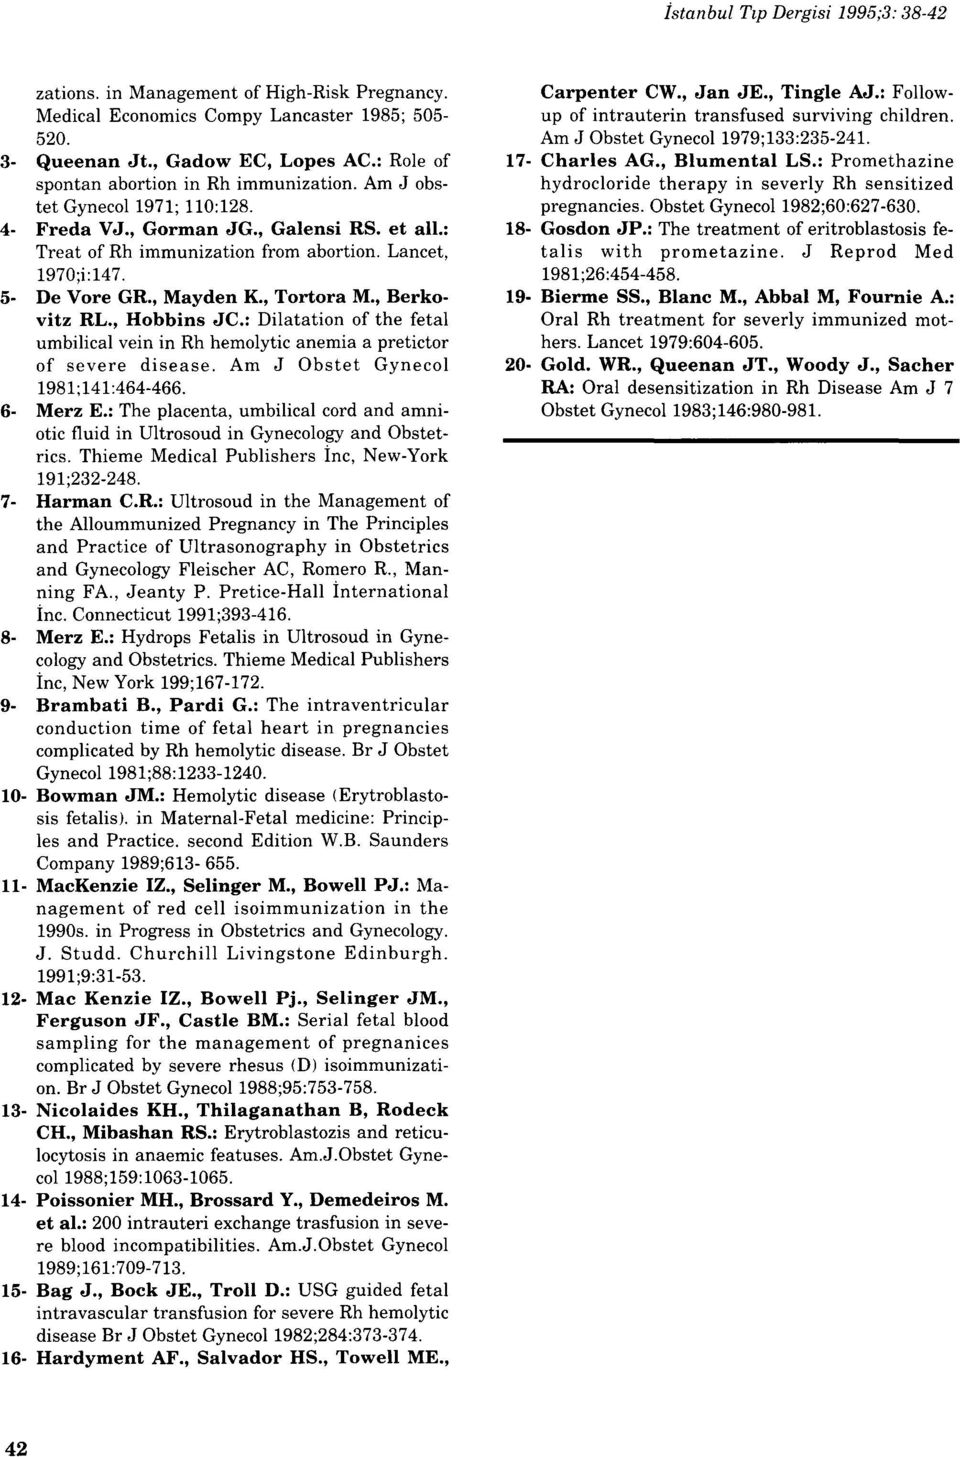 5- De Vore GR., Mayden K., Tortora M., Berkovitz RL., Hobbins JC.: Dilatation of the fetal umbilical vein in Rh hemolytic anemia a pretictor of severe disease. Am J Obstet Gynecol 1981;141:464-466.